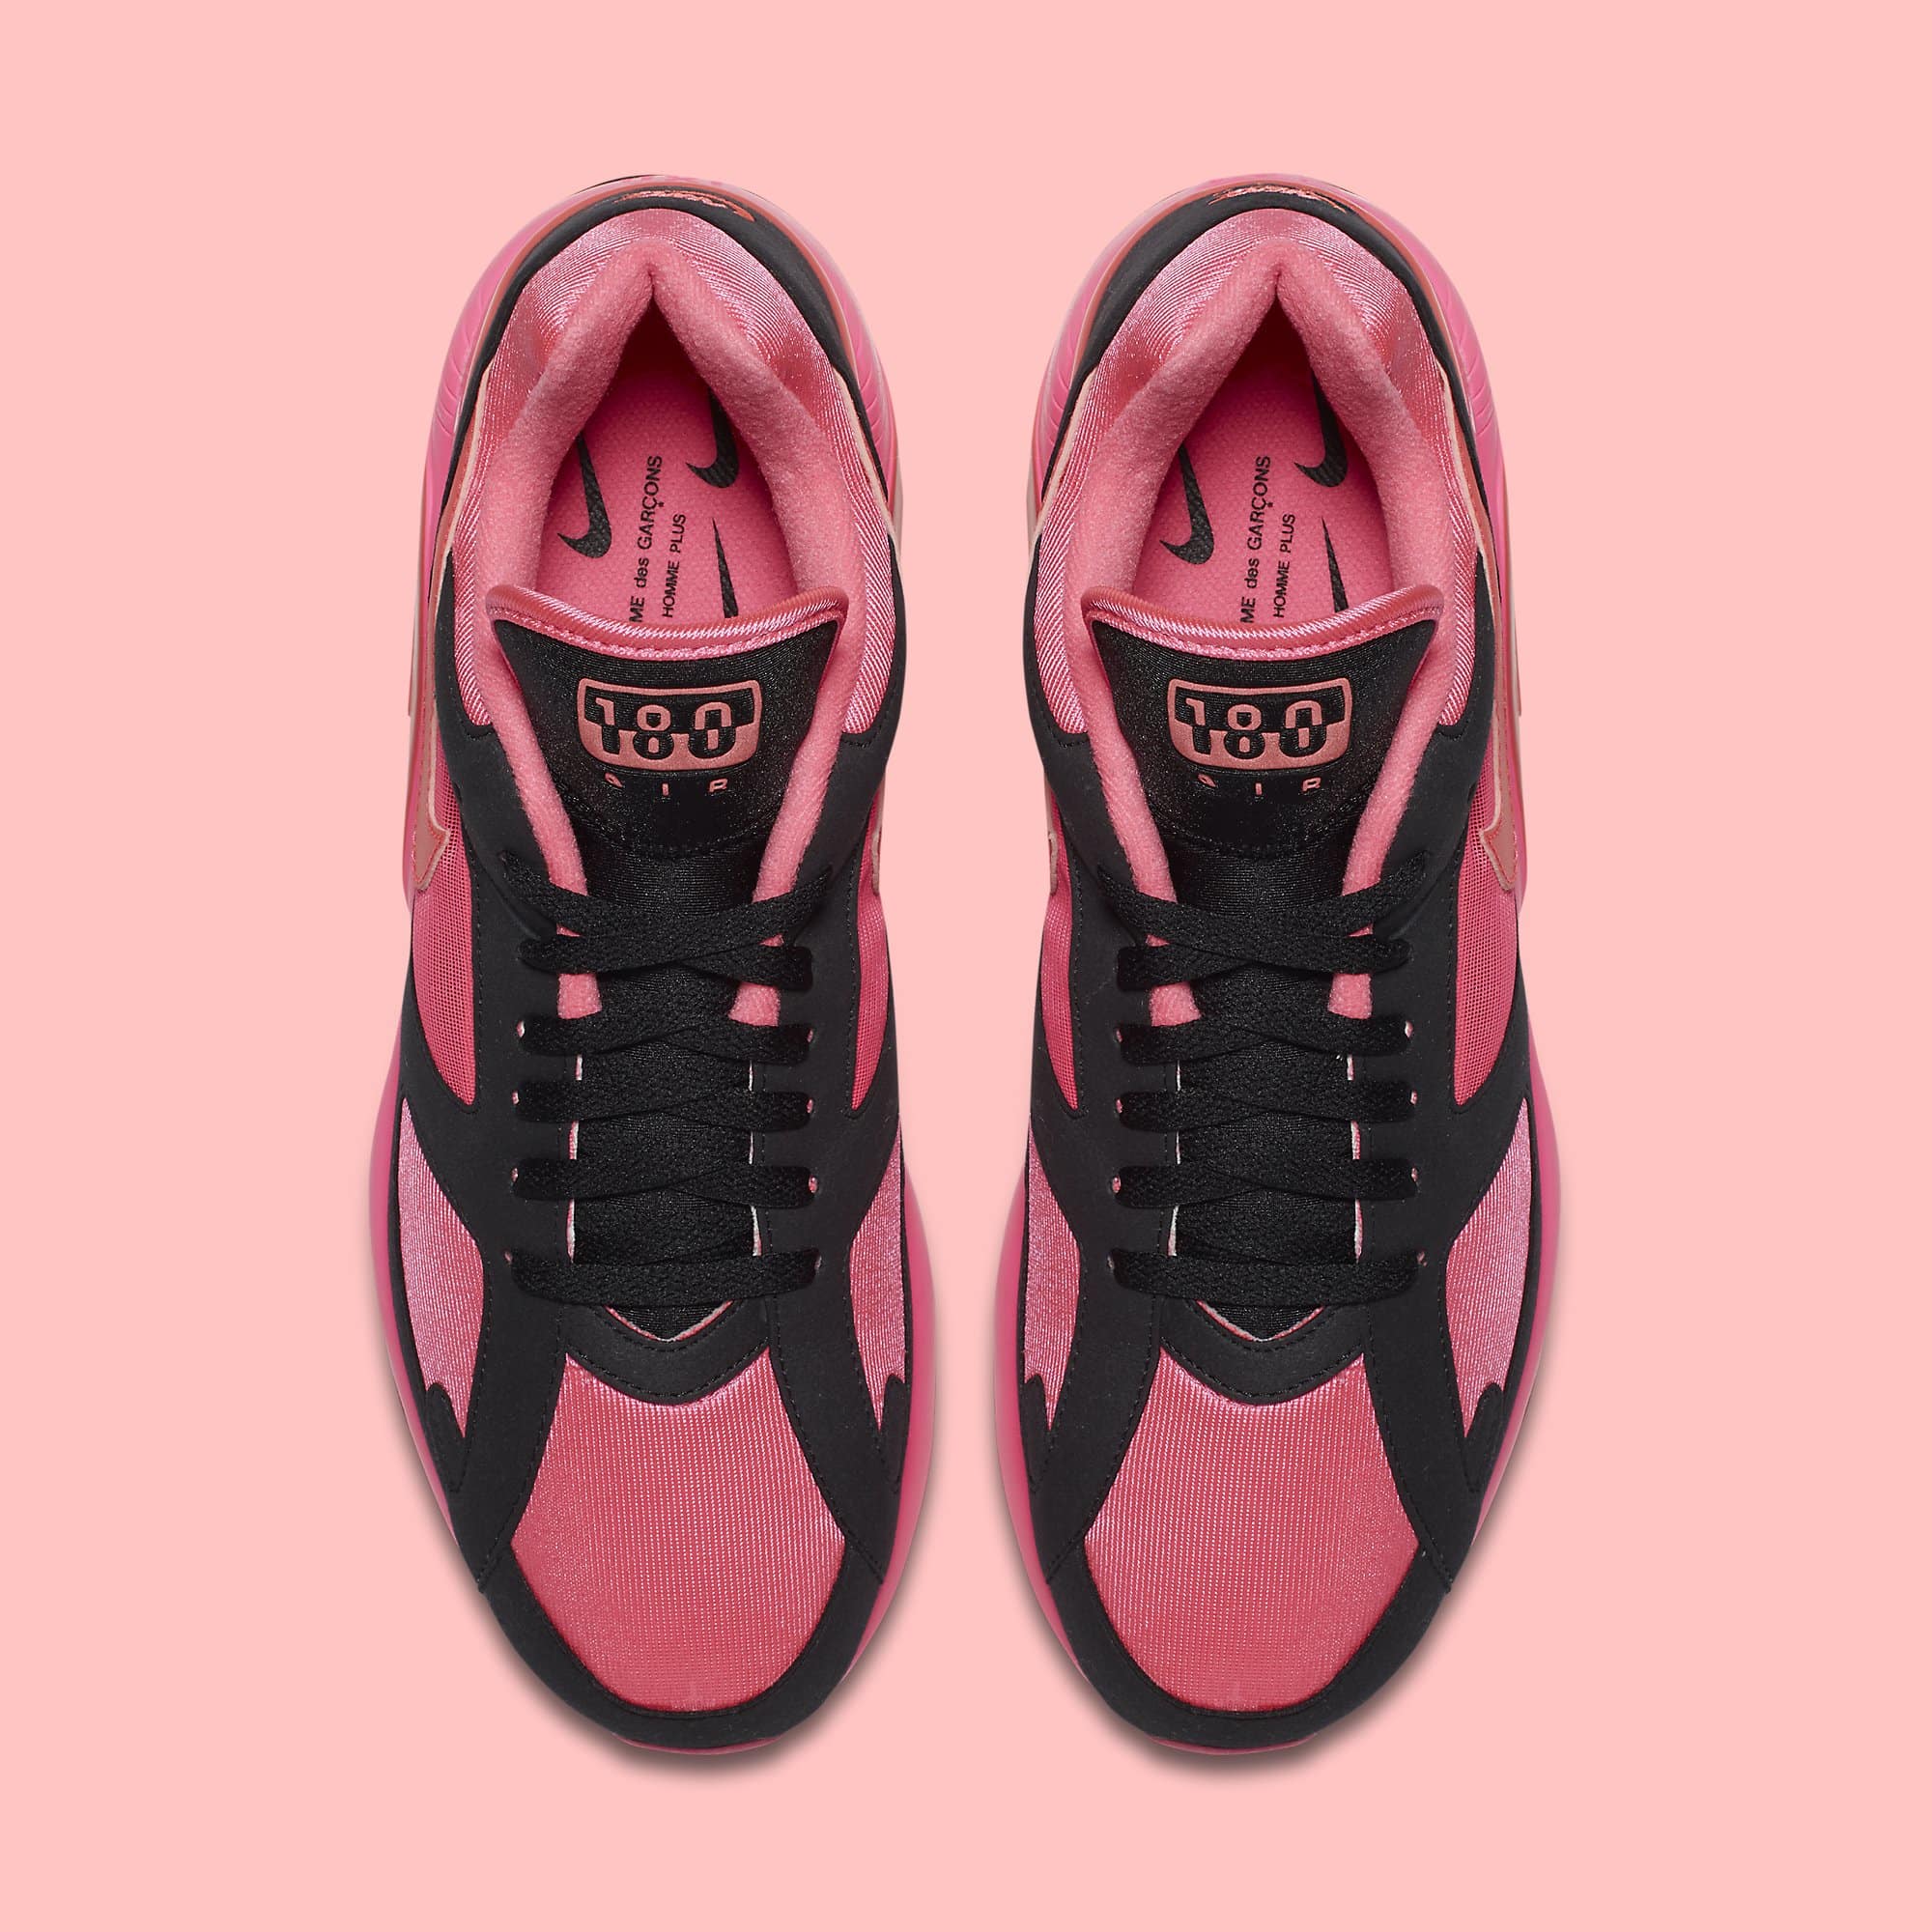 Sepatu Nike Air aMax 180 x Comme des Garcons CDG 2018 - Black Pink